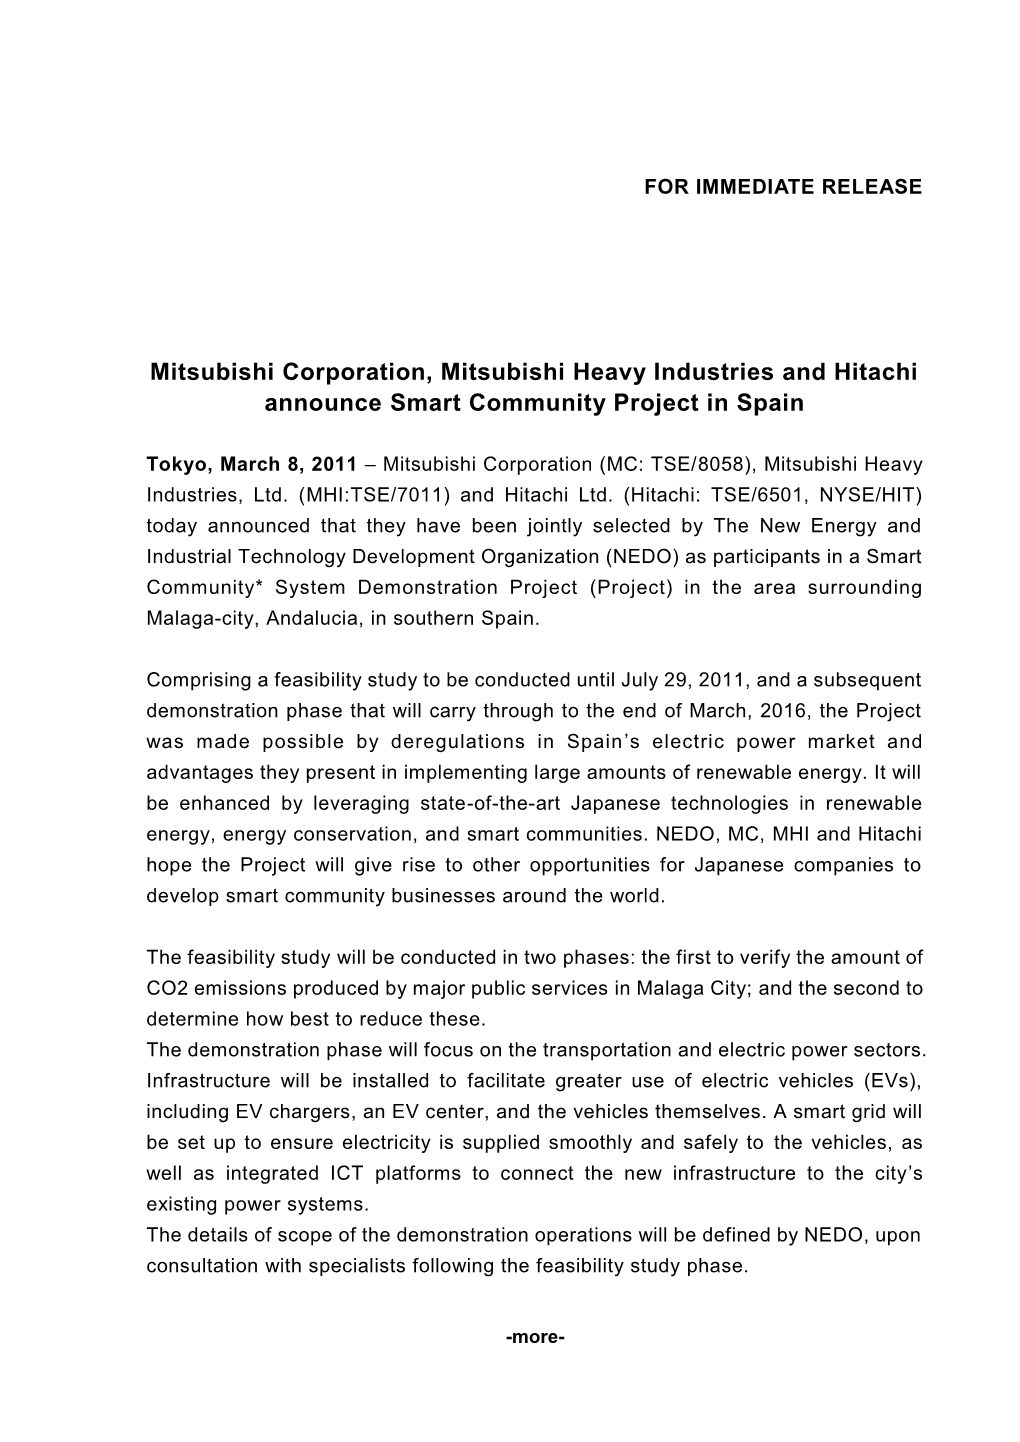 Mitsubishi Corporation, Mitsubishi Heavy Industries and Hitachi Announce Smart Community Project in Spain